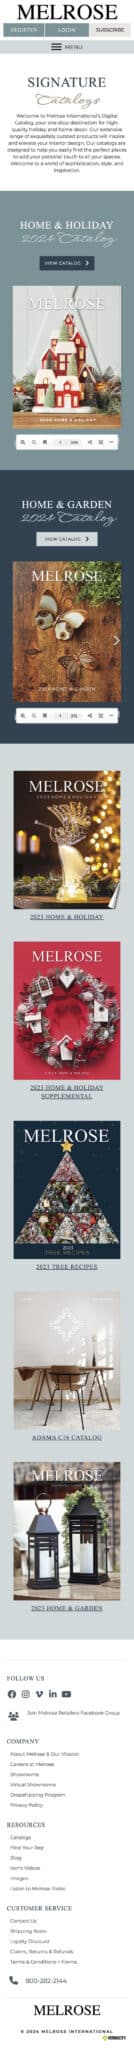 Melrose Catalog Page Mobile